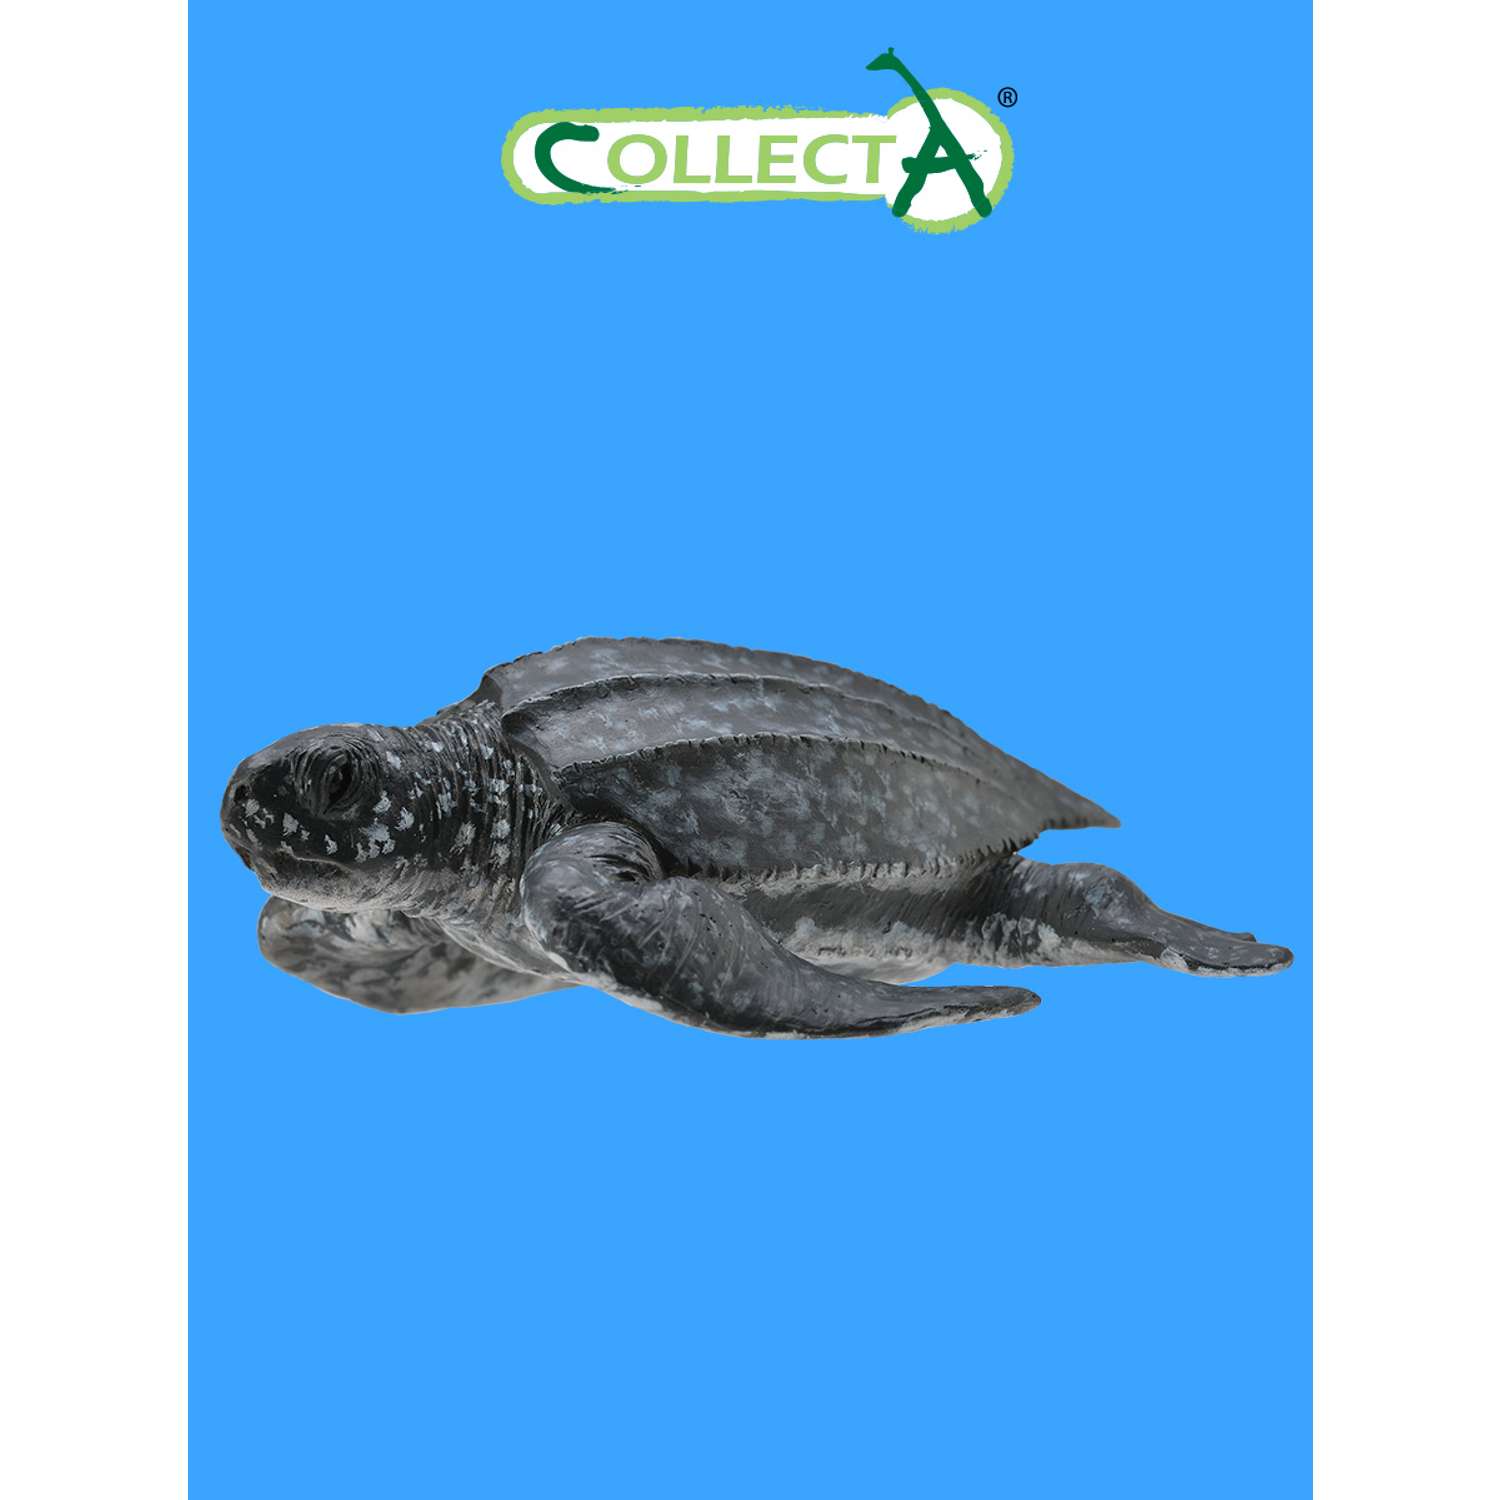 Фигурка животного Collecta Кожистая черепаха - фото 1